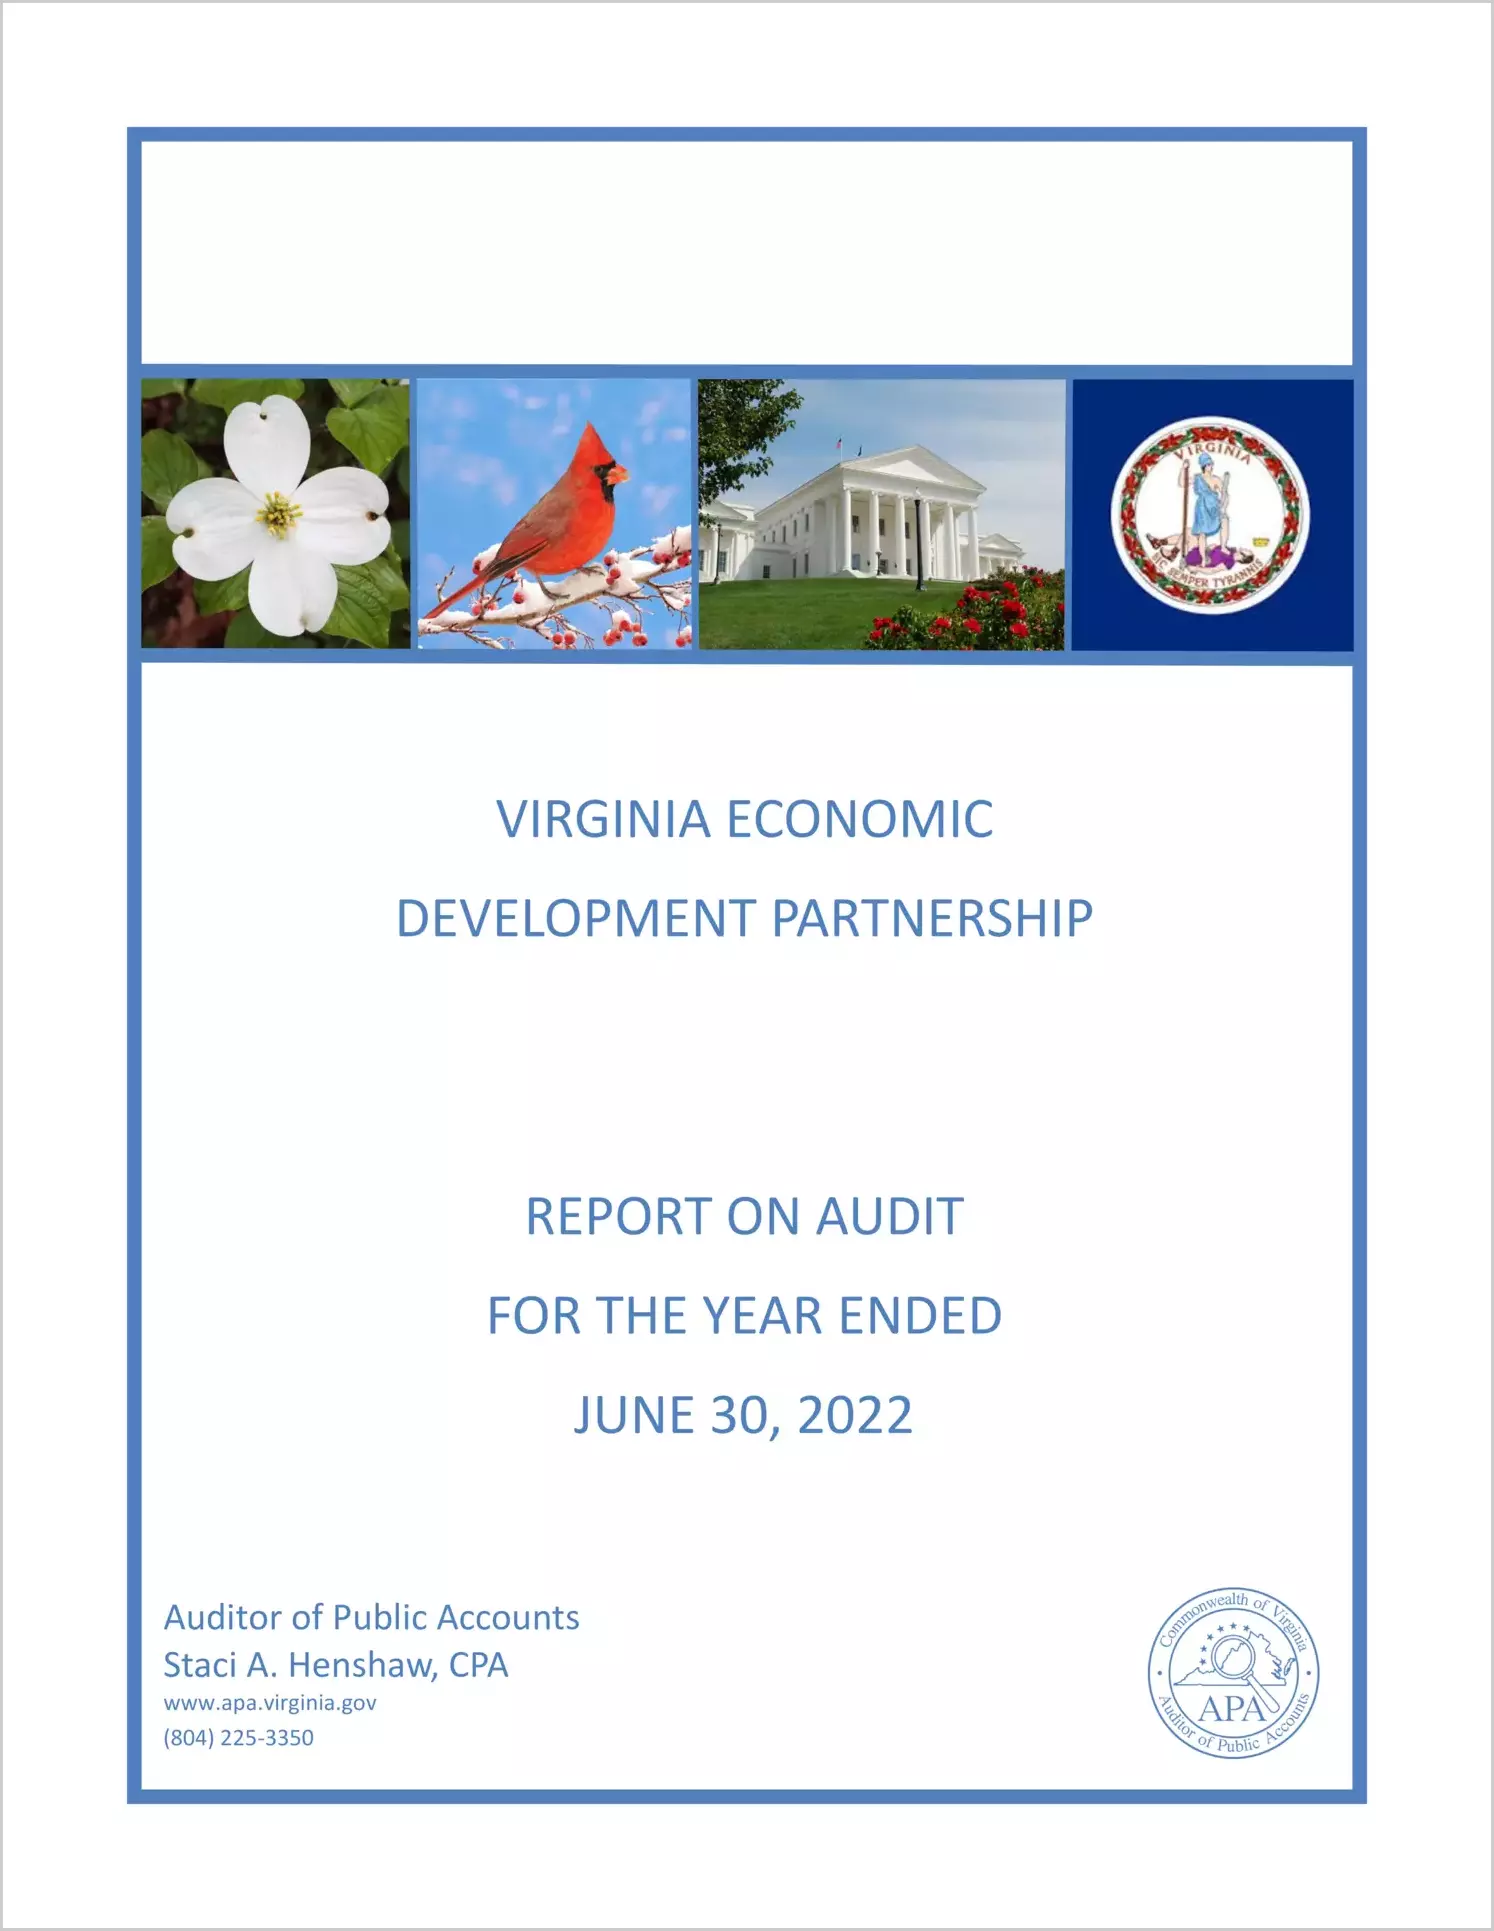 Virginia Economic Development Partnership for the year ended June 30, 2022